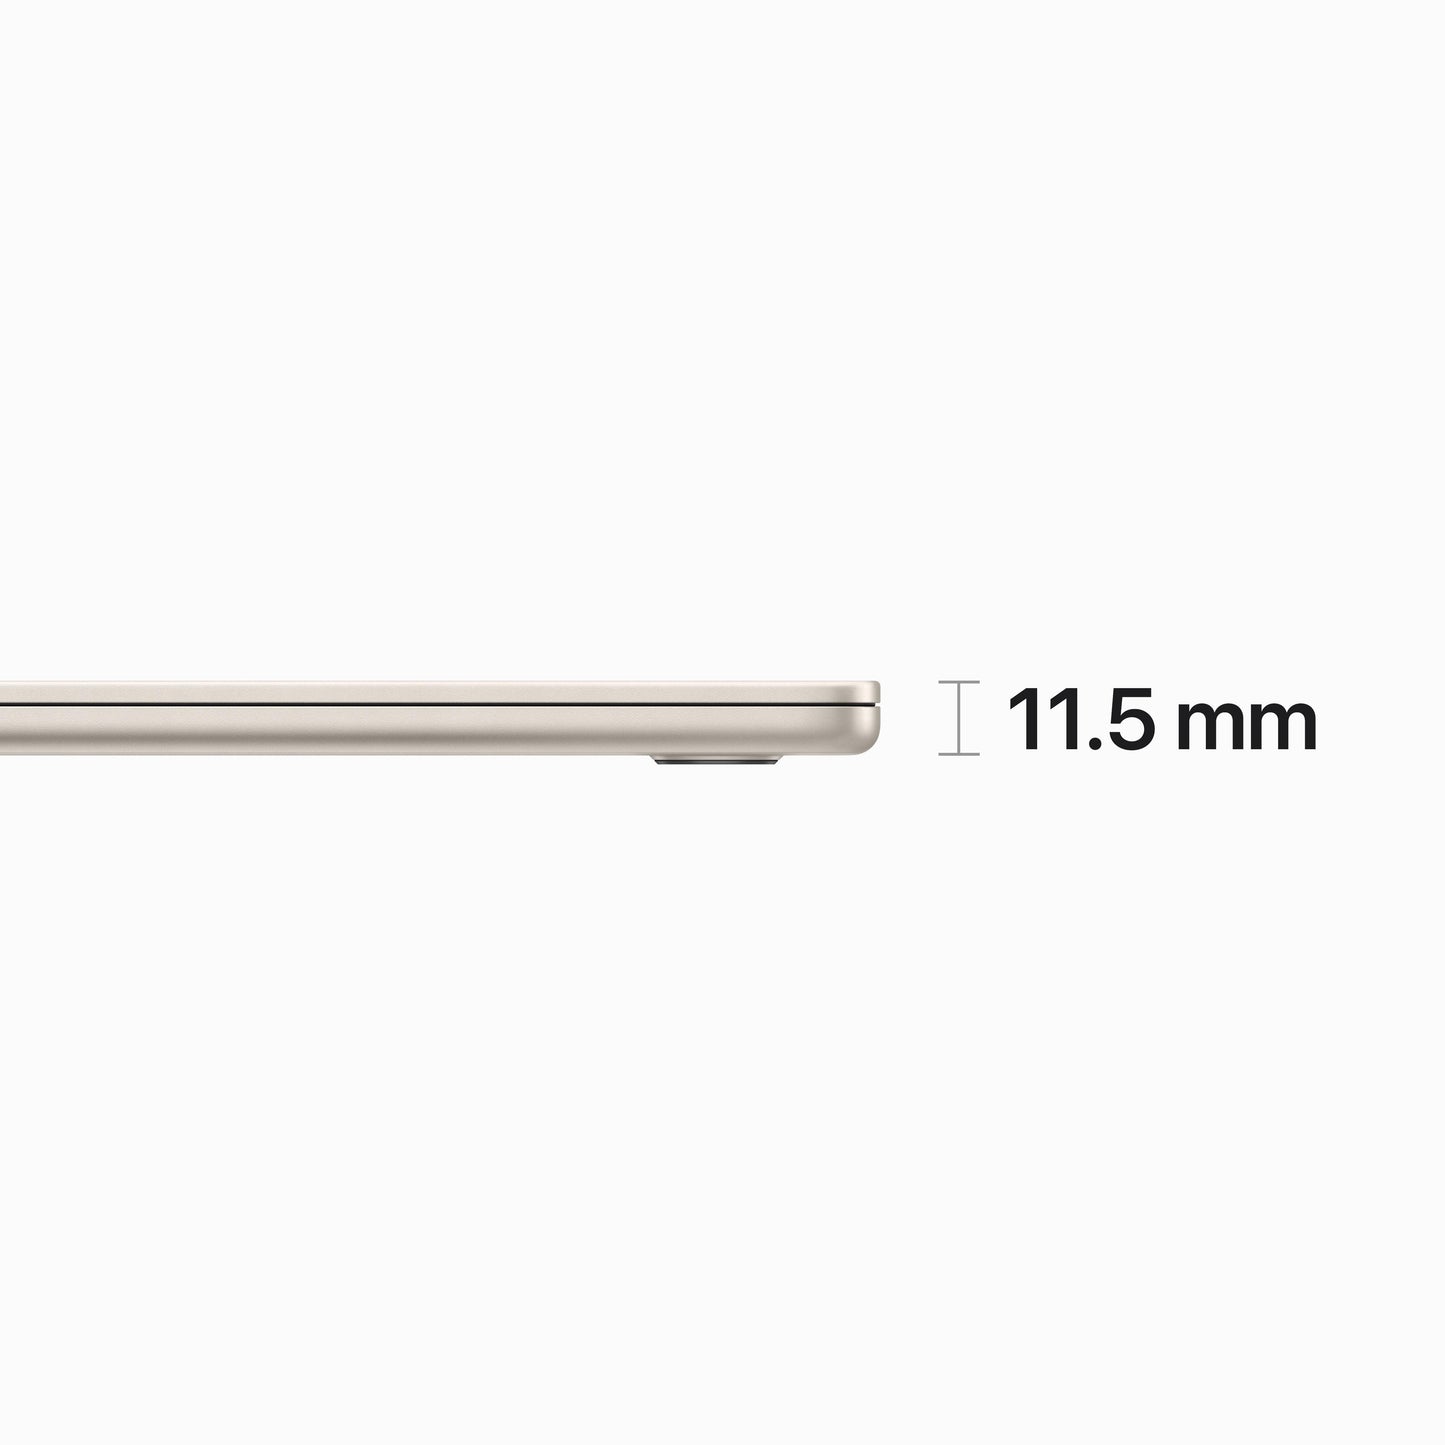 EOL 15-inch MacBook Air: Apple M2‑chip met 8‑core CPU en 10‑core GPU, 8 GB, 256 GB - Sterrenlicht (Azerty FR)